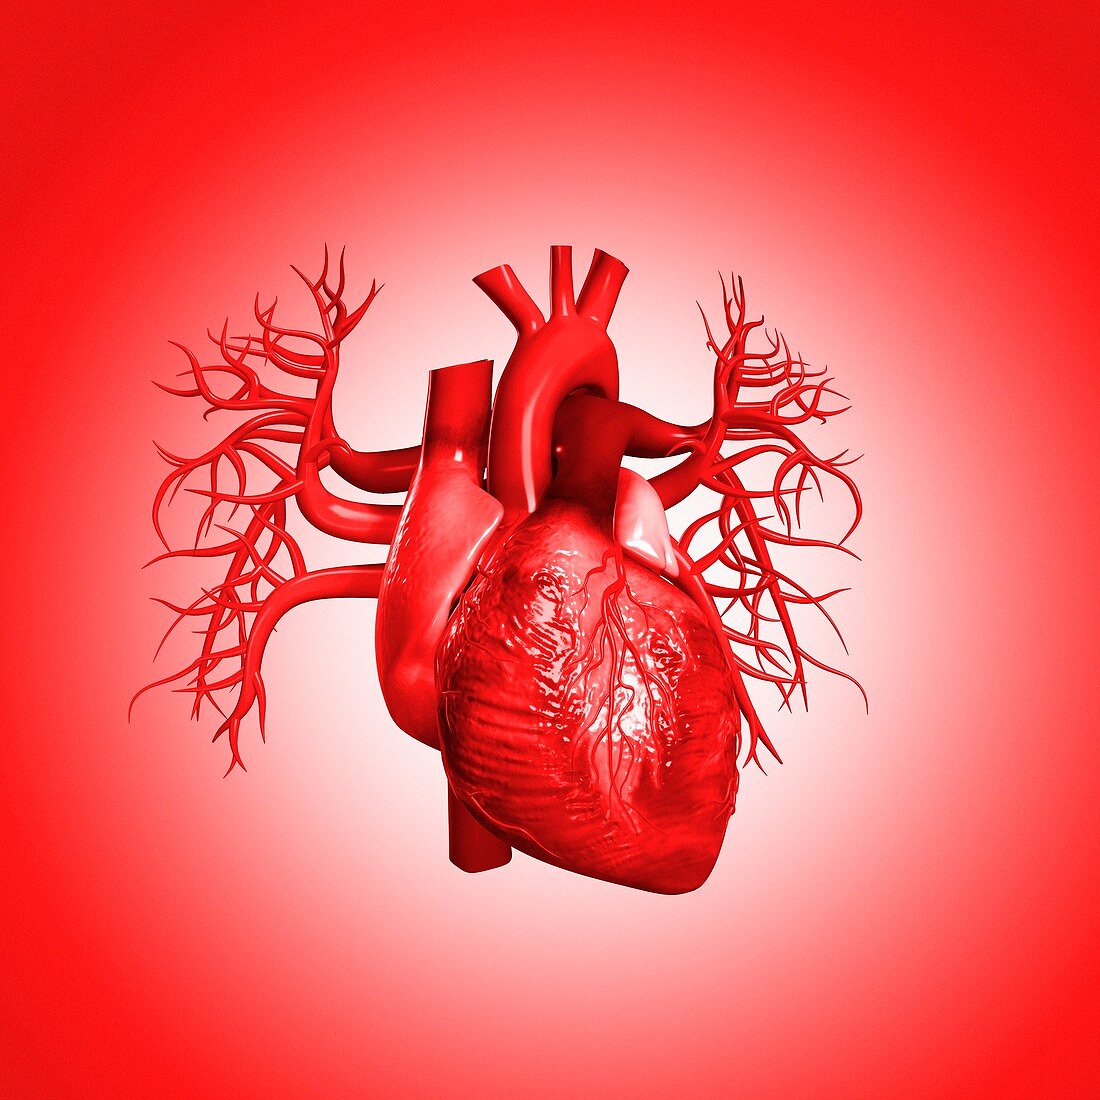 Heart against red background, illustration